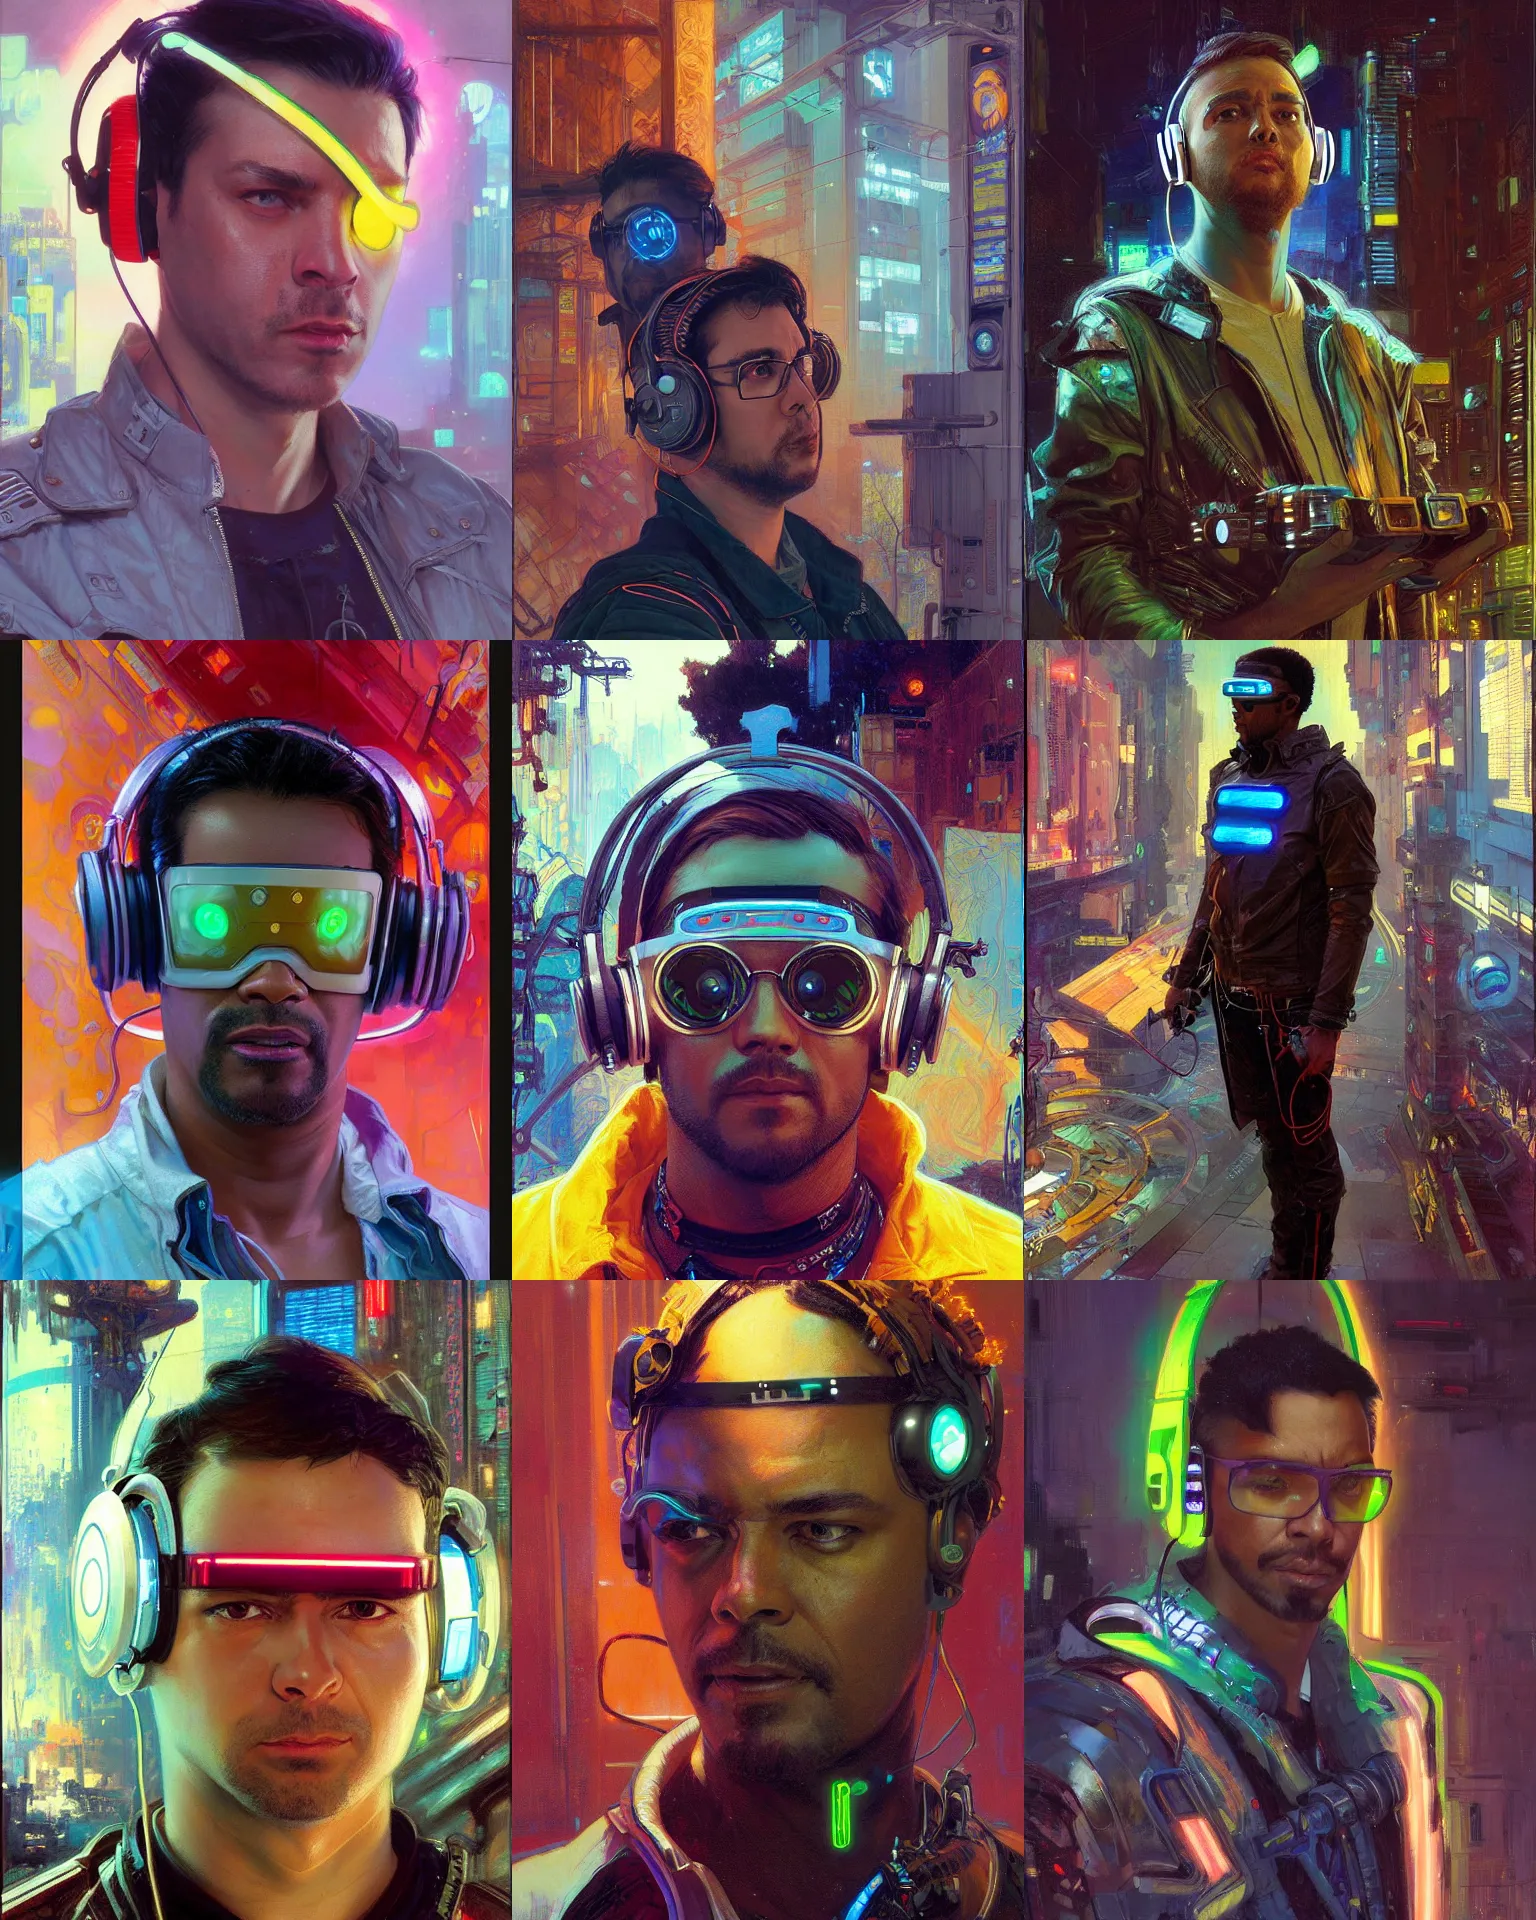 Prompt: digital neon cyberpunk male with geordi eye visor and headphones portrait painting by donato giancola, ismail inceoglu, john berkey, j. c. leyendecker, alphonse mucha